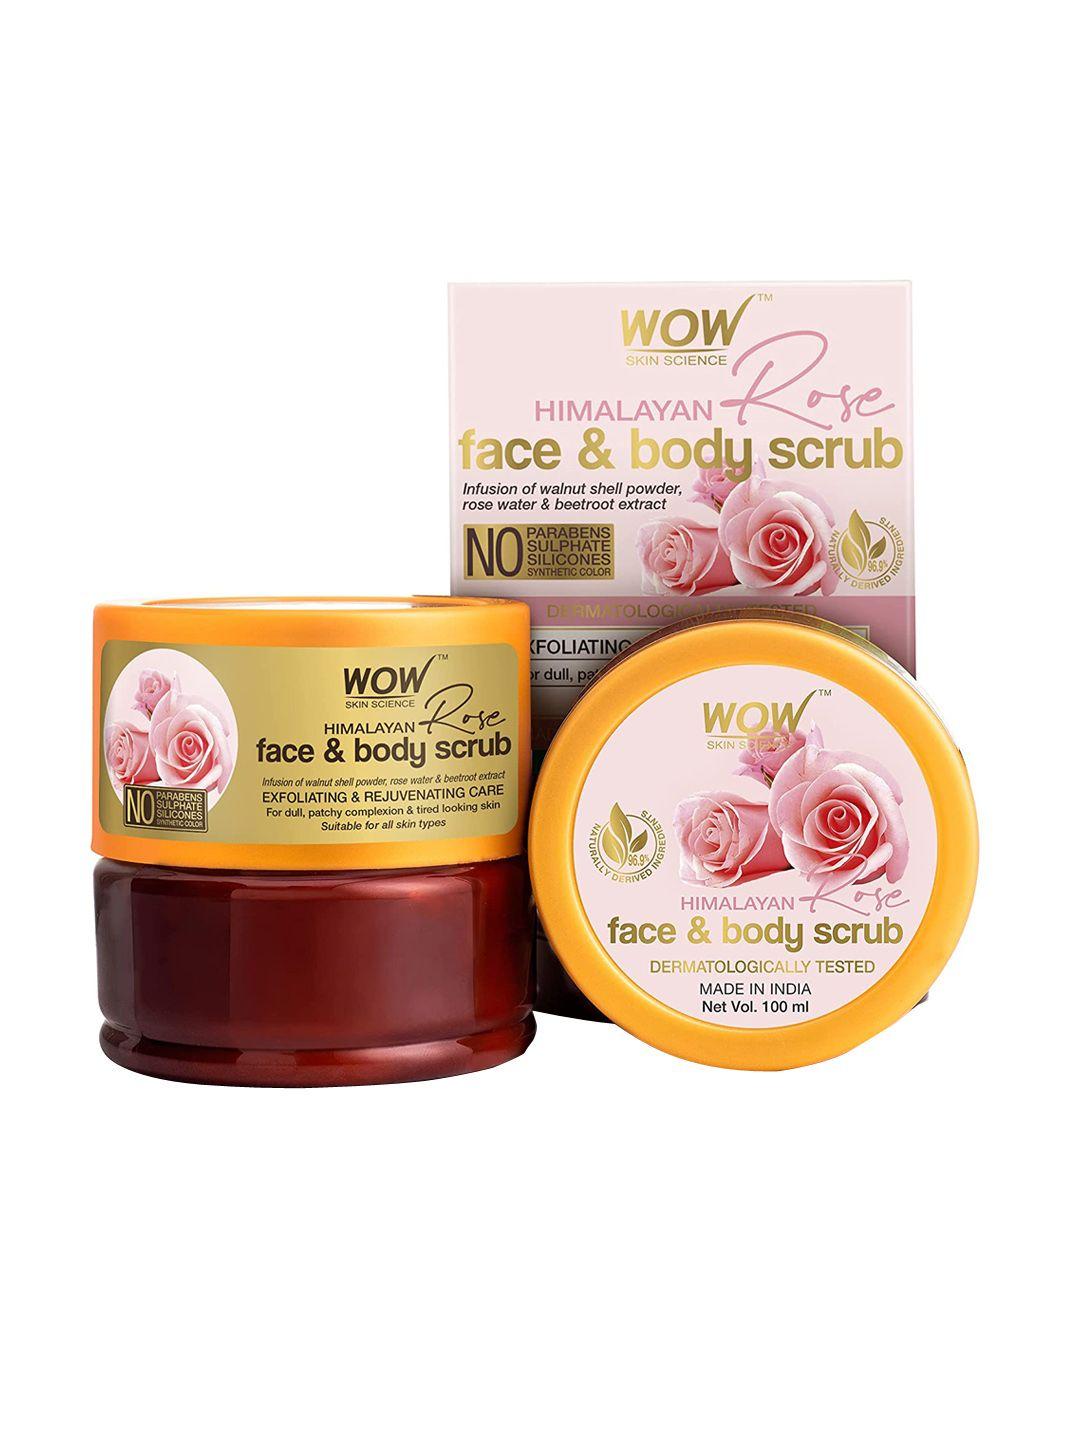 wow skin science himalayan rose exfoliating & rejuvenating care face & body scrub 100 ml